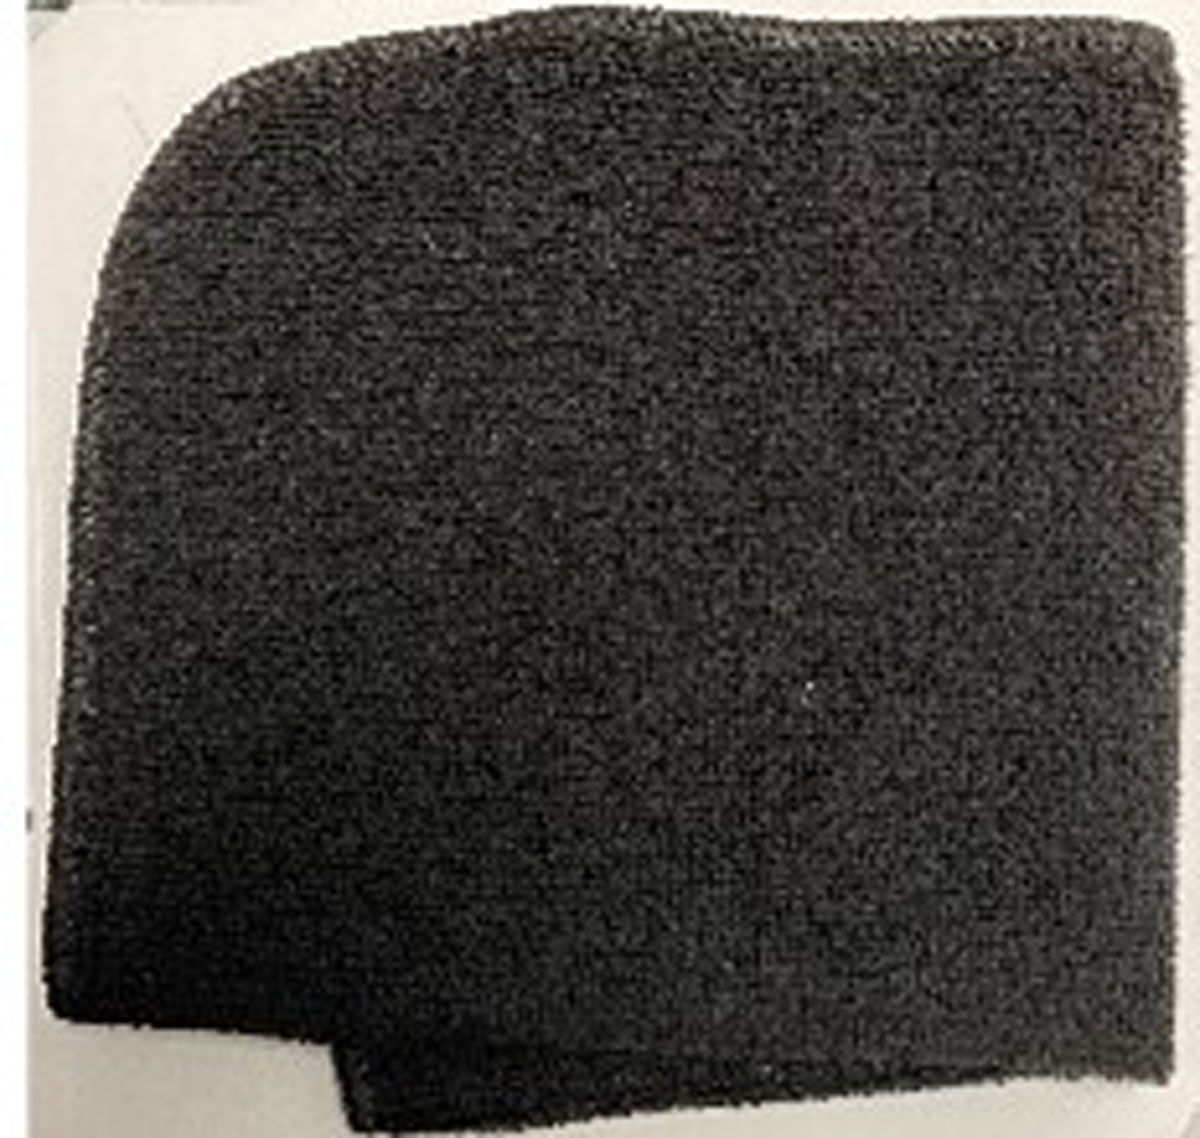 12x12 Black Bulk Microfiber Cloths, 250 gsm Questions & Answers